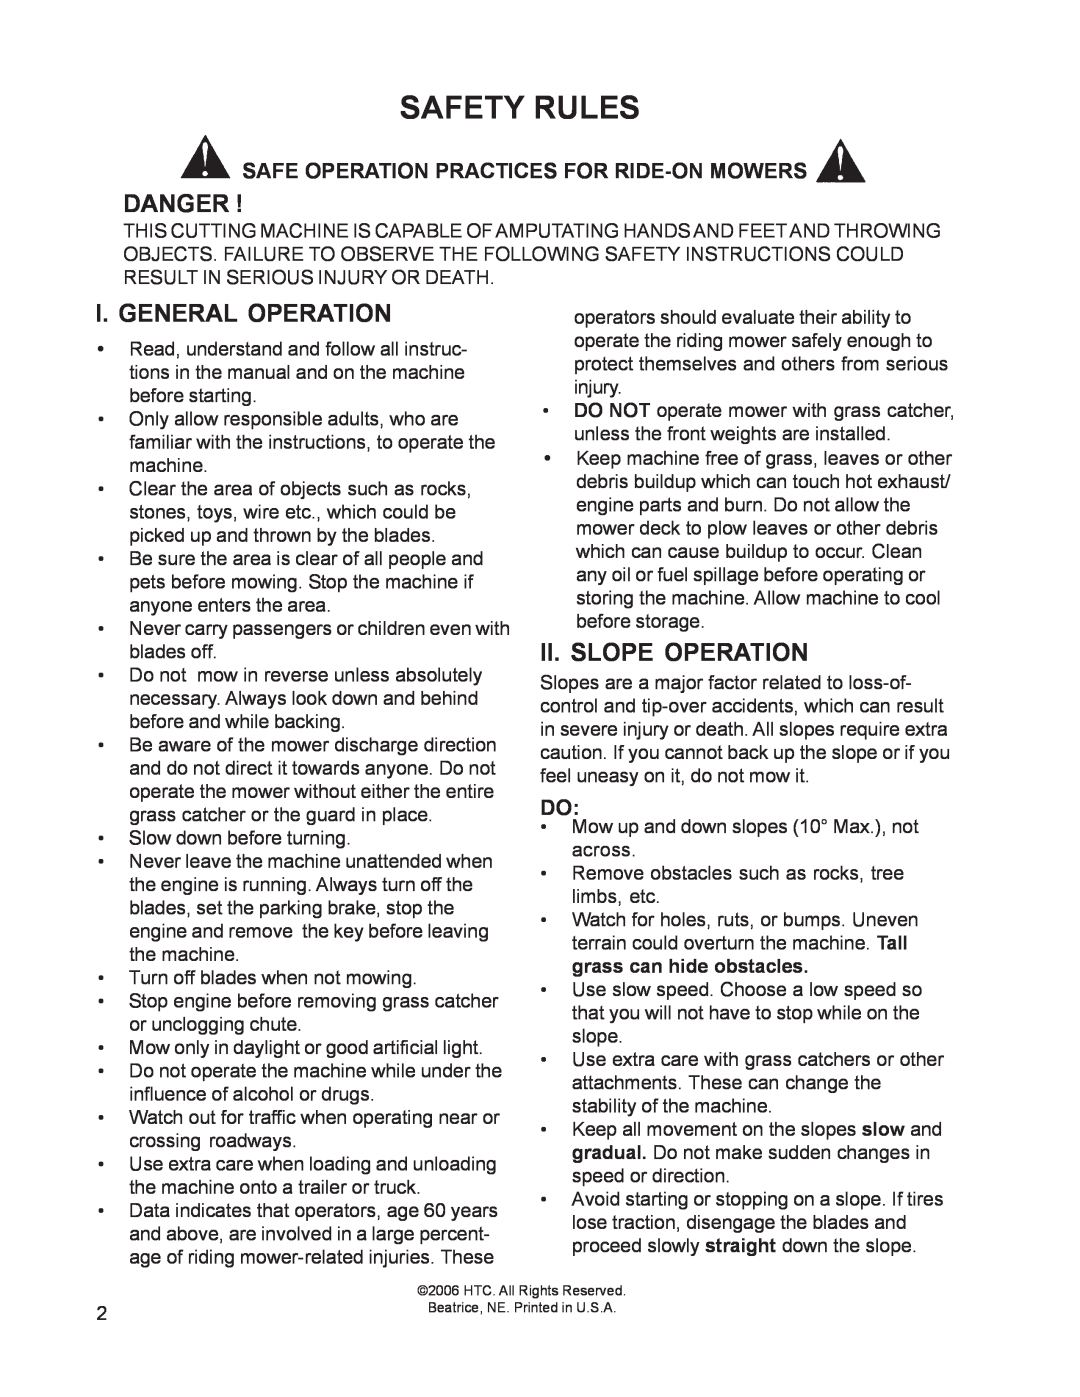 Husqvarna 968999515 manual Safety Rules, Danger, I. General Operation, Ii. Slope Operation 